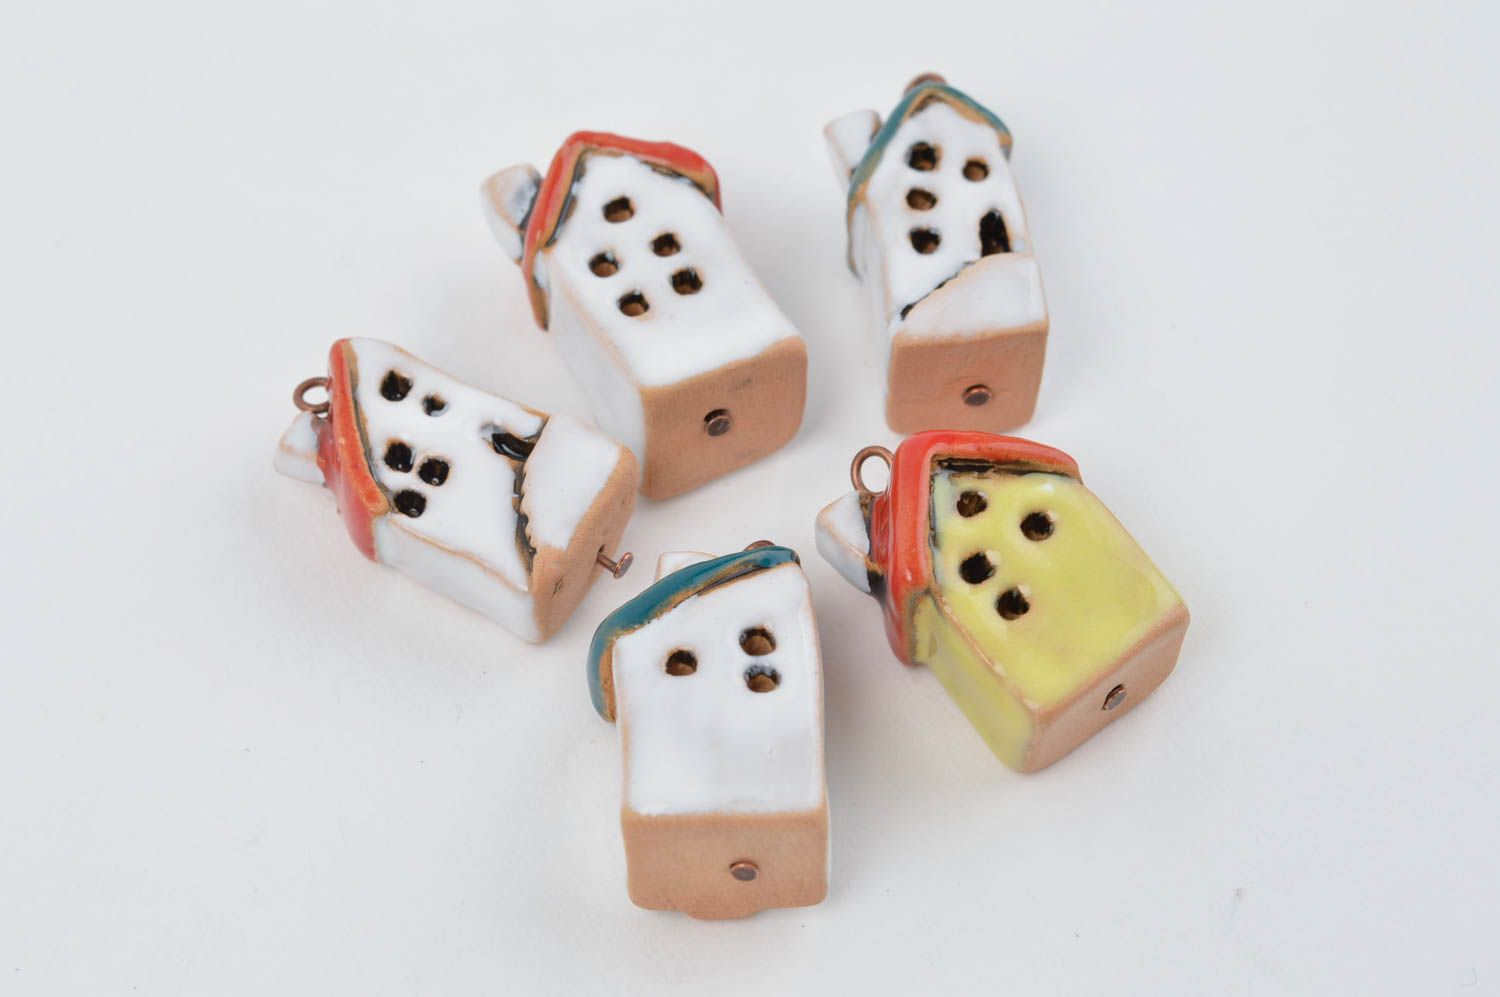 Unusual handmade ceramic pendant fashion tips artisan jewelry designs gift ideas photo 4